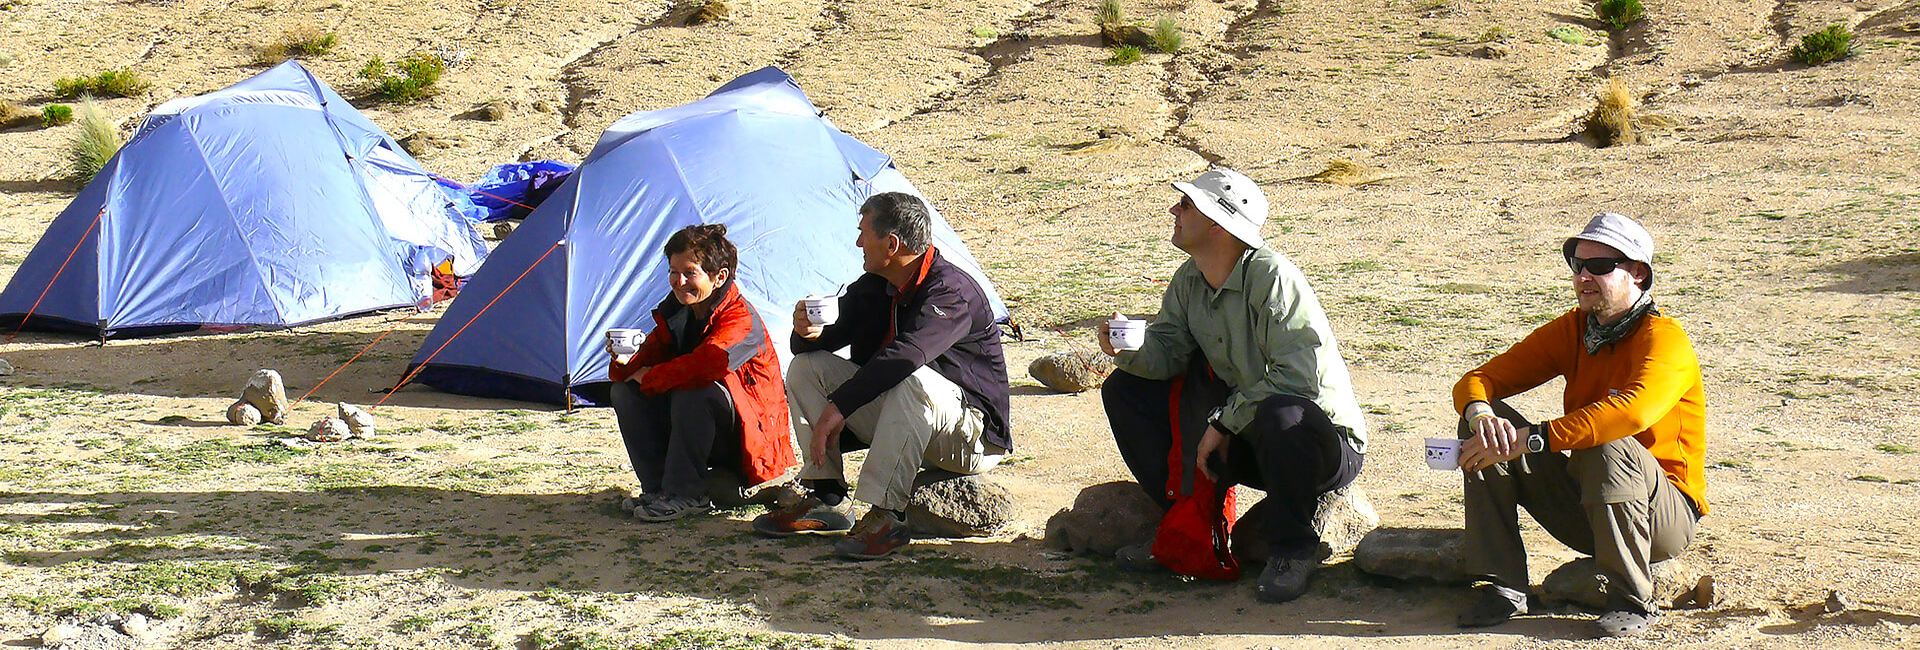 Camp in the Atacama Desert, Trekking Trip